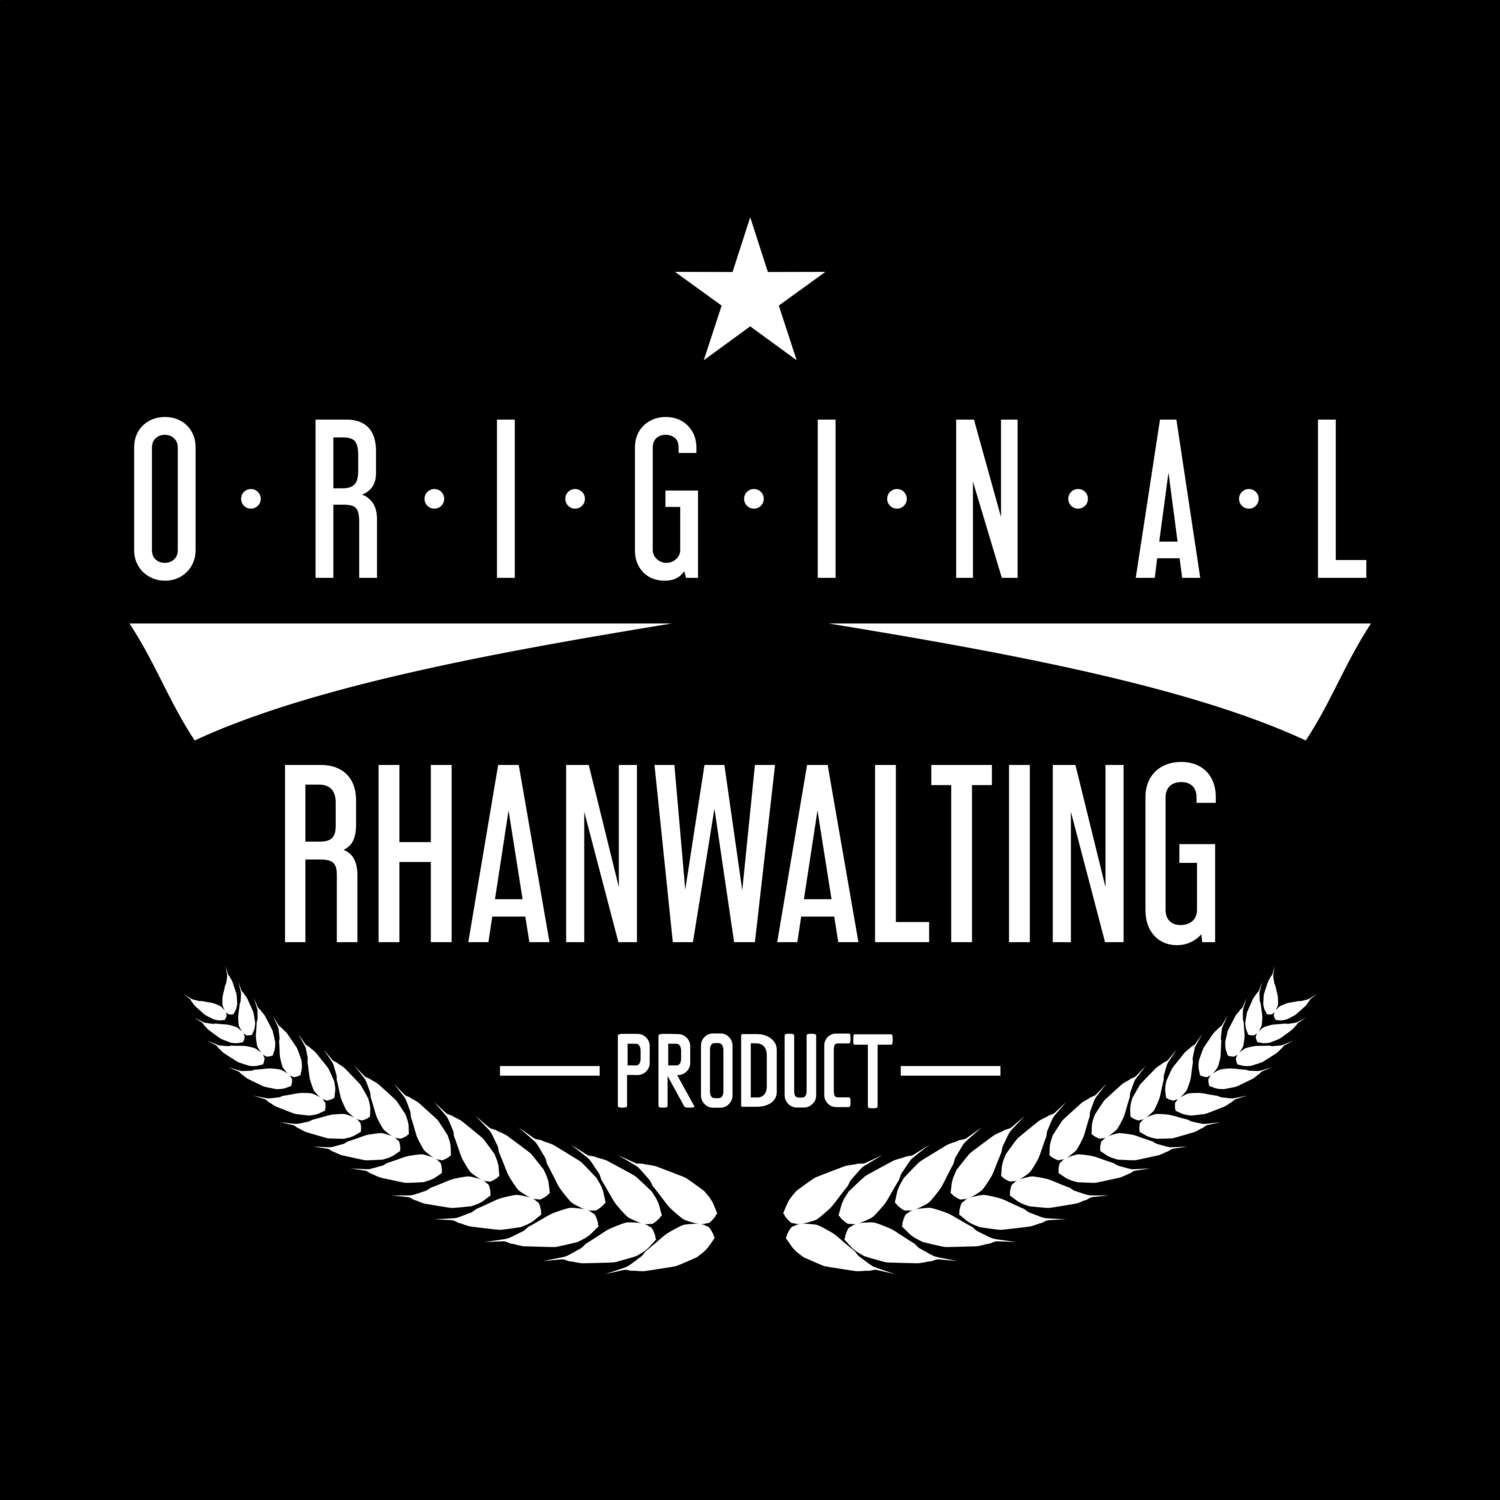 Rhanwalting T-Shirt »Original Product«